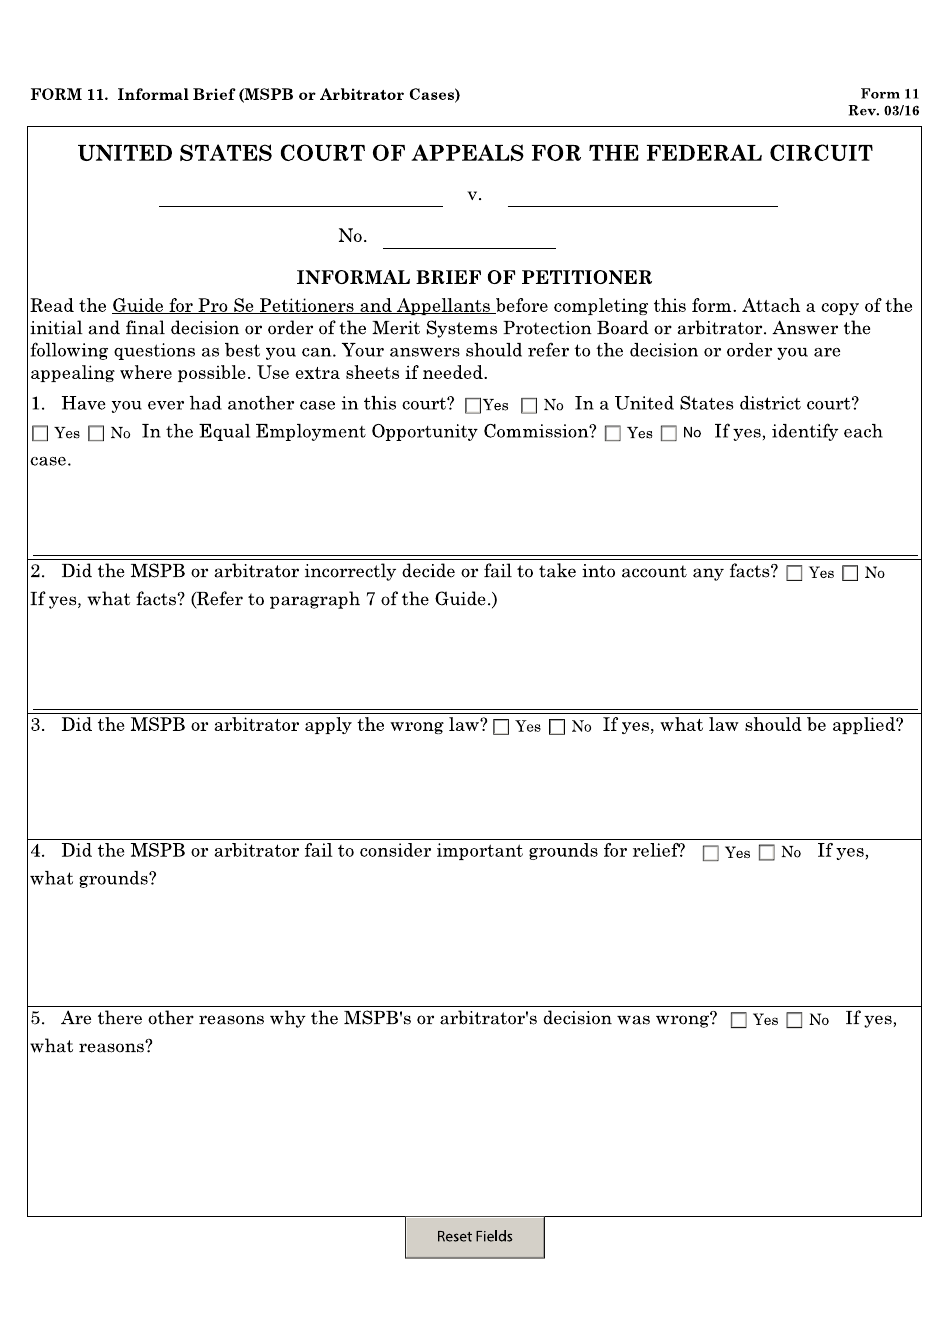 Form 11 Informal Brief (Mspb or Arbitrator Cases), Page 1